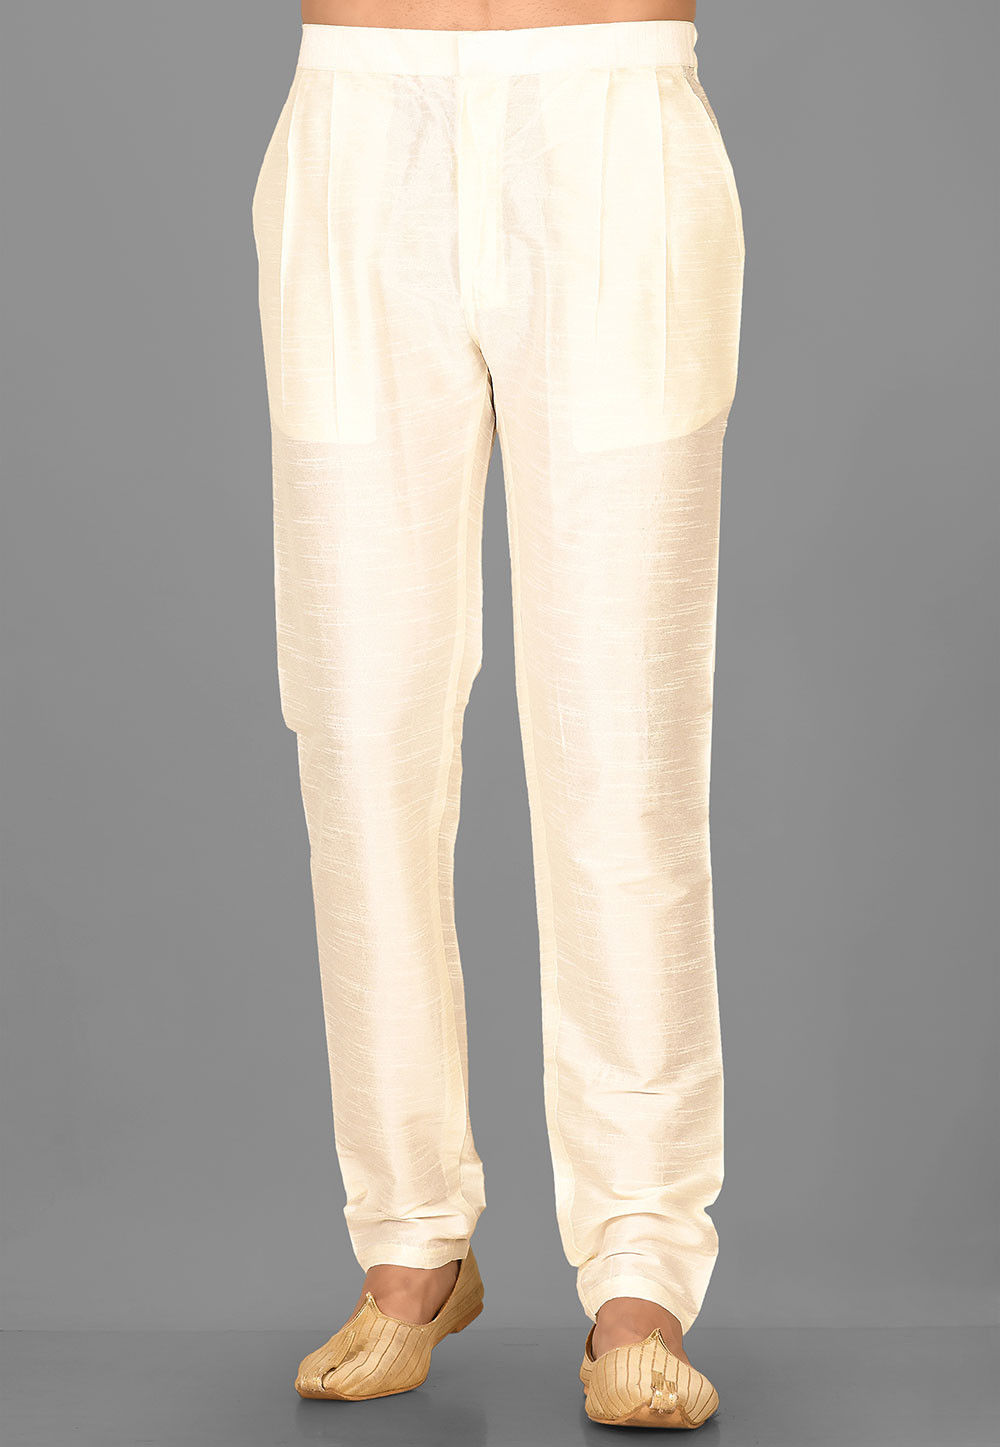 Buy Solid Color Dupion Silk Pant in Cream Online : MLC1551 - Utsav Fashion